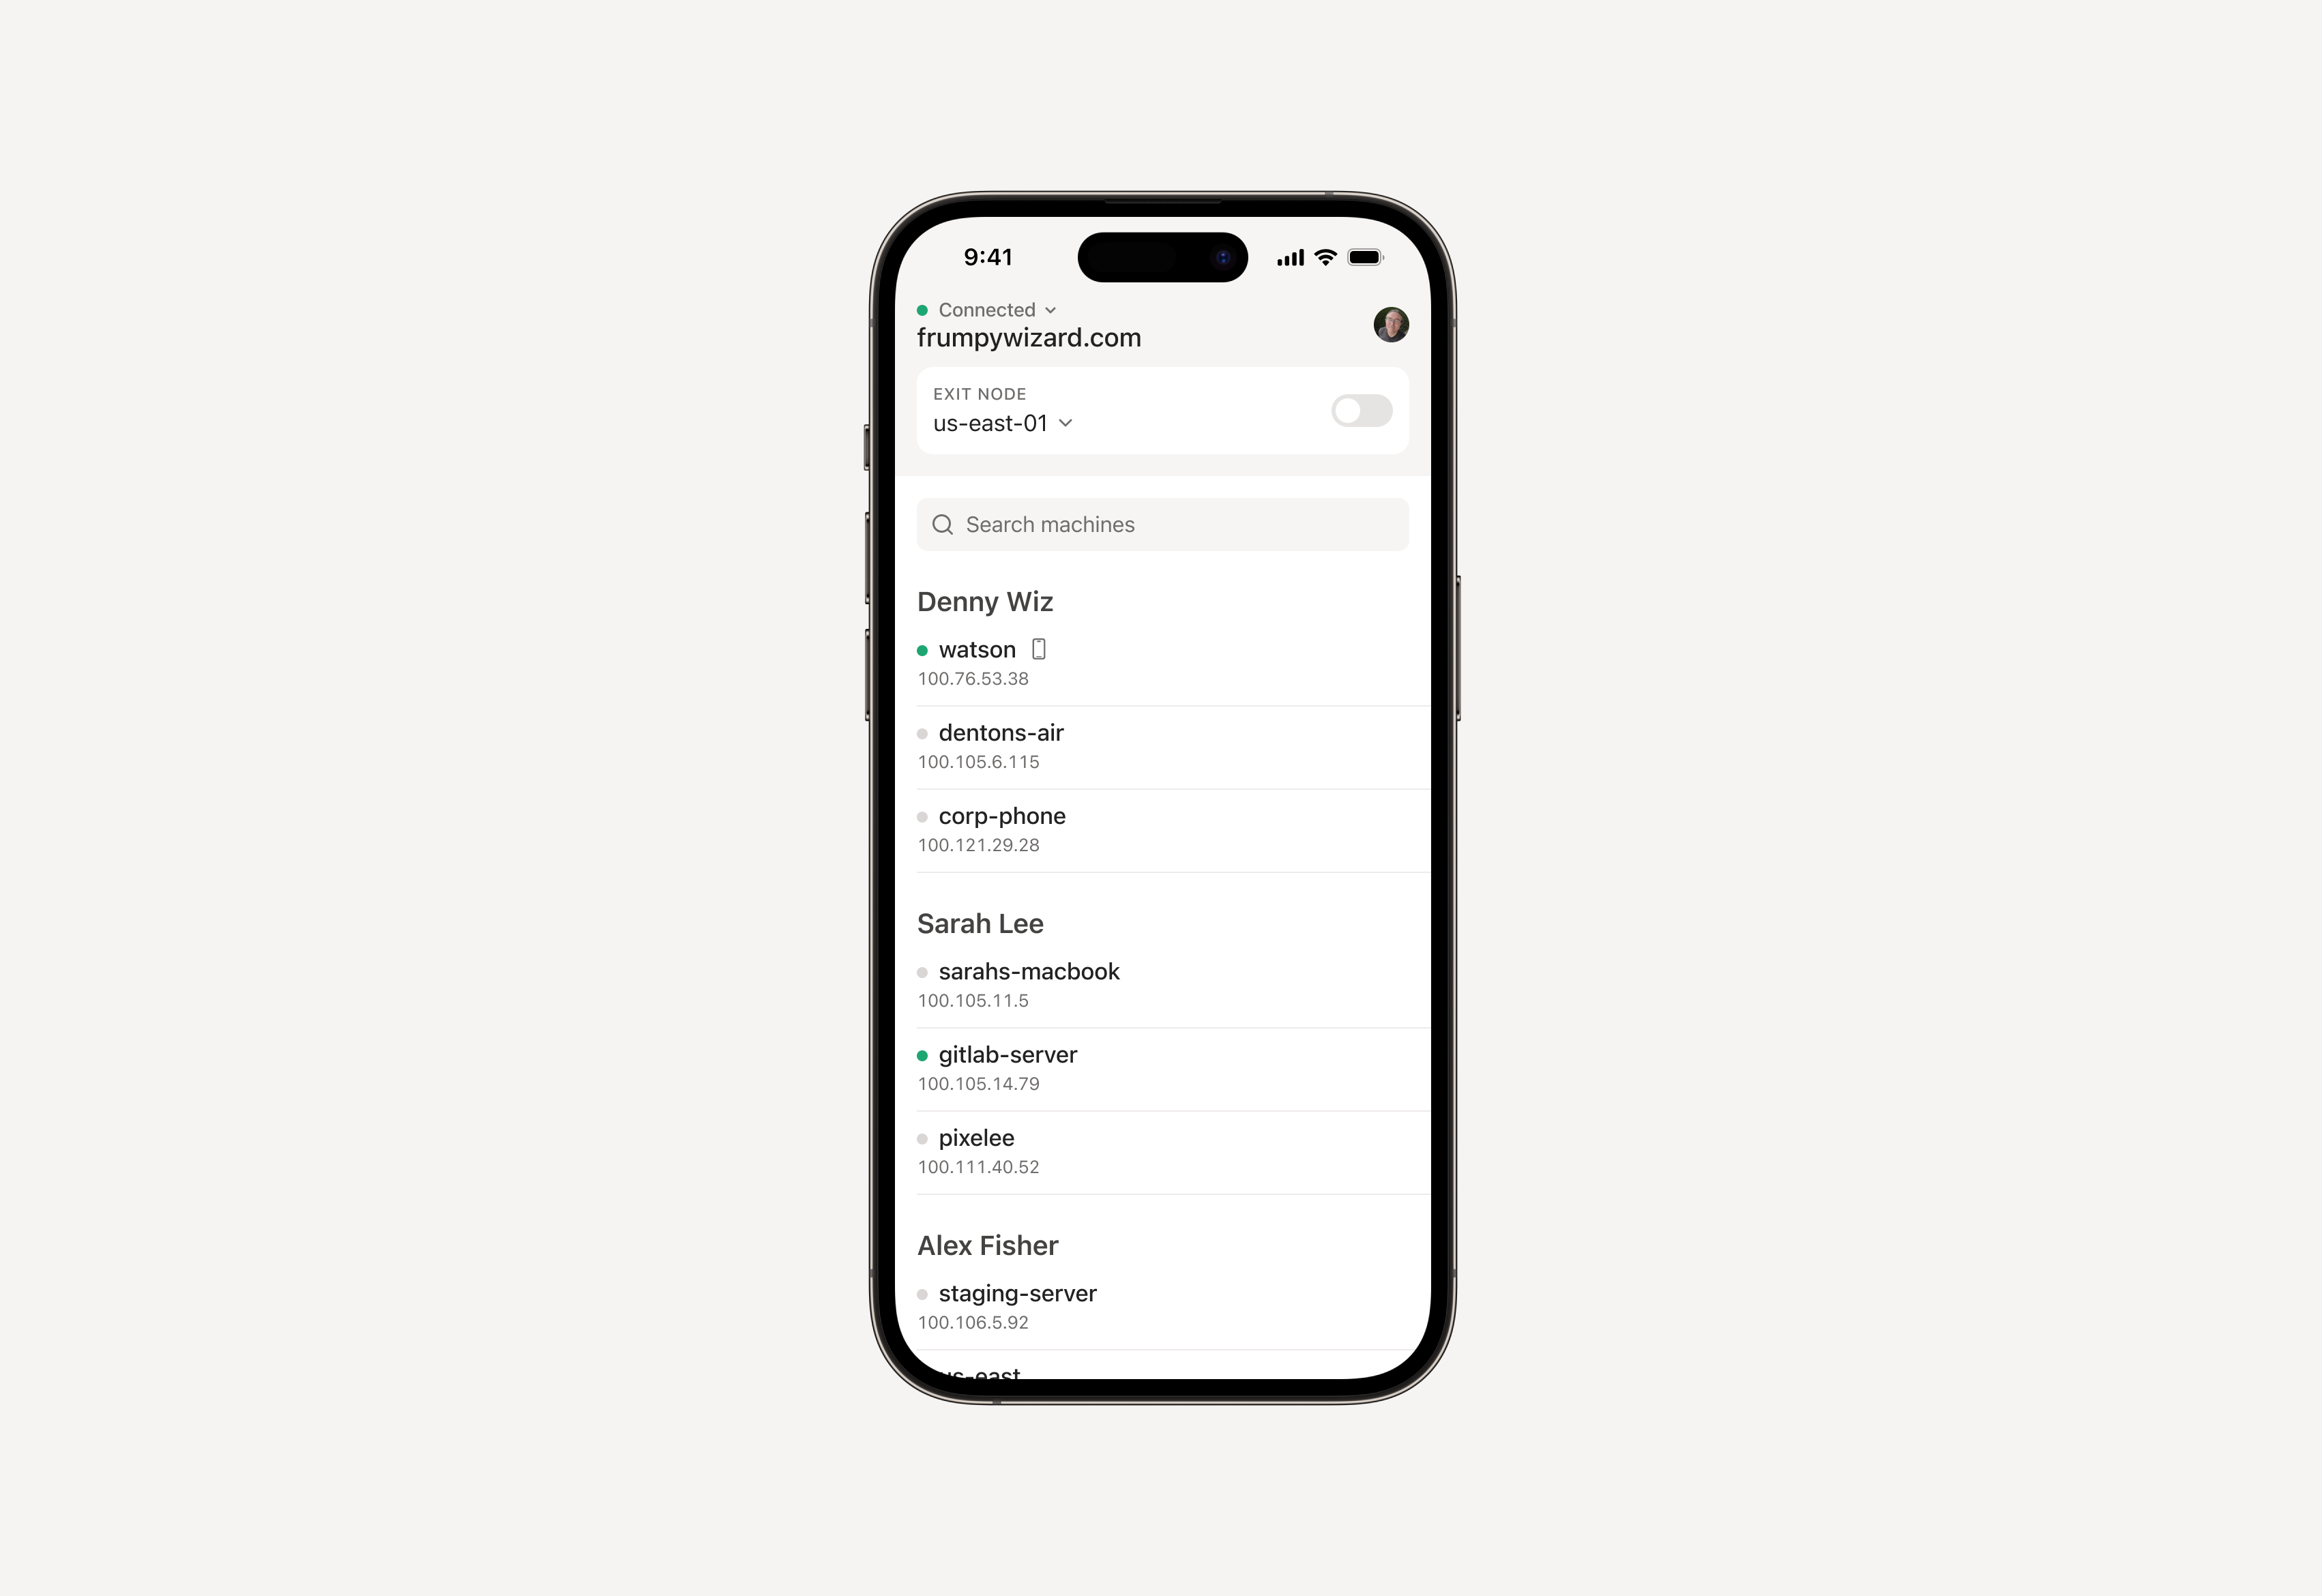 A screenshot of the new UI